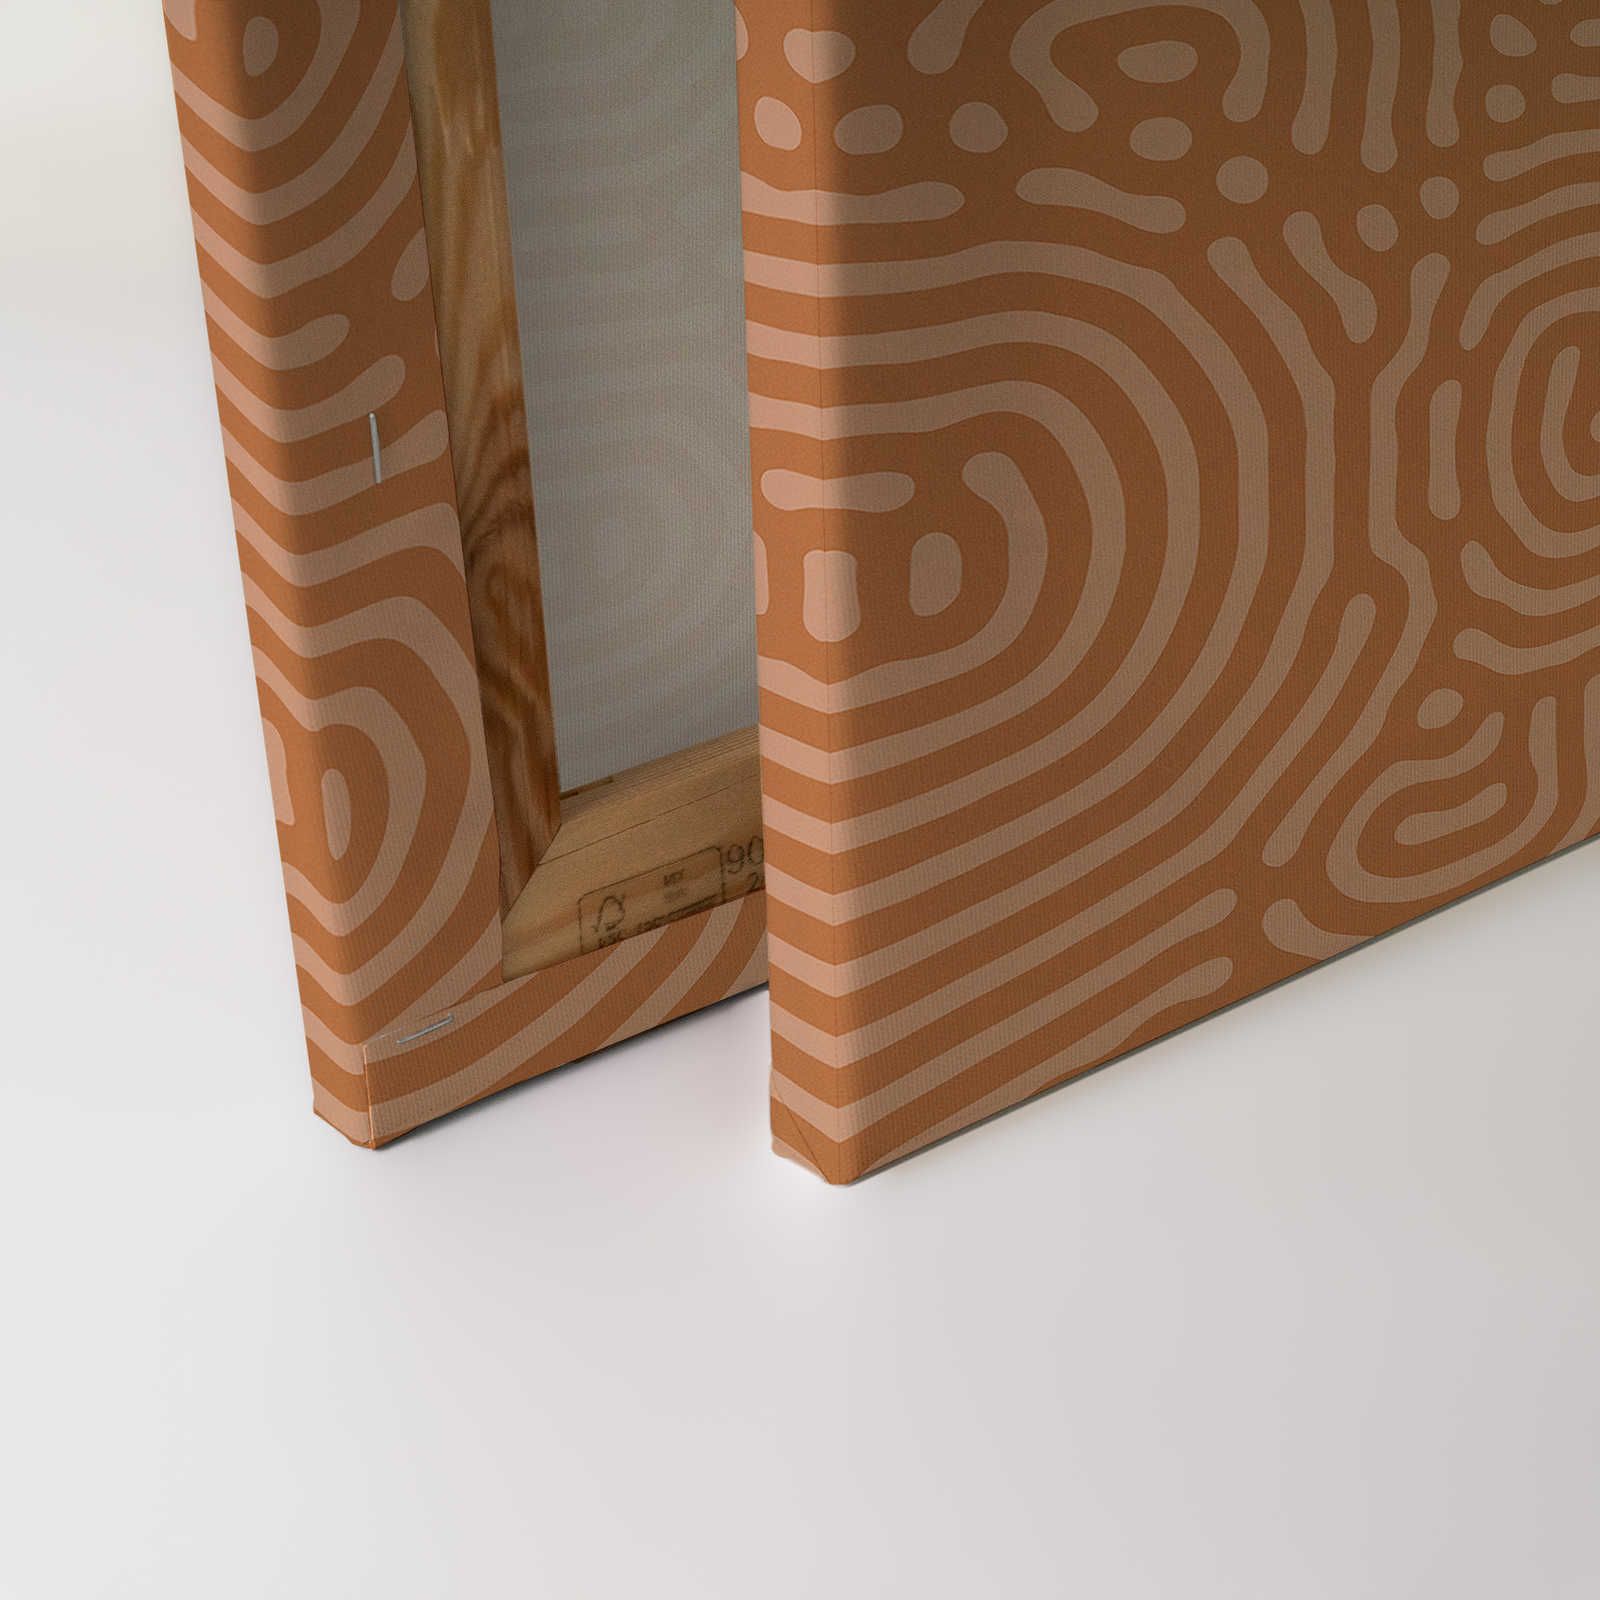             Sahel 2 - Oranges Leinwandbild Labyrinth Muster Terrakotta – 0,90 m x 0,60 m
        